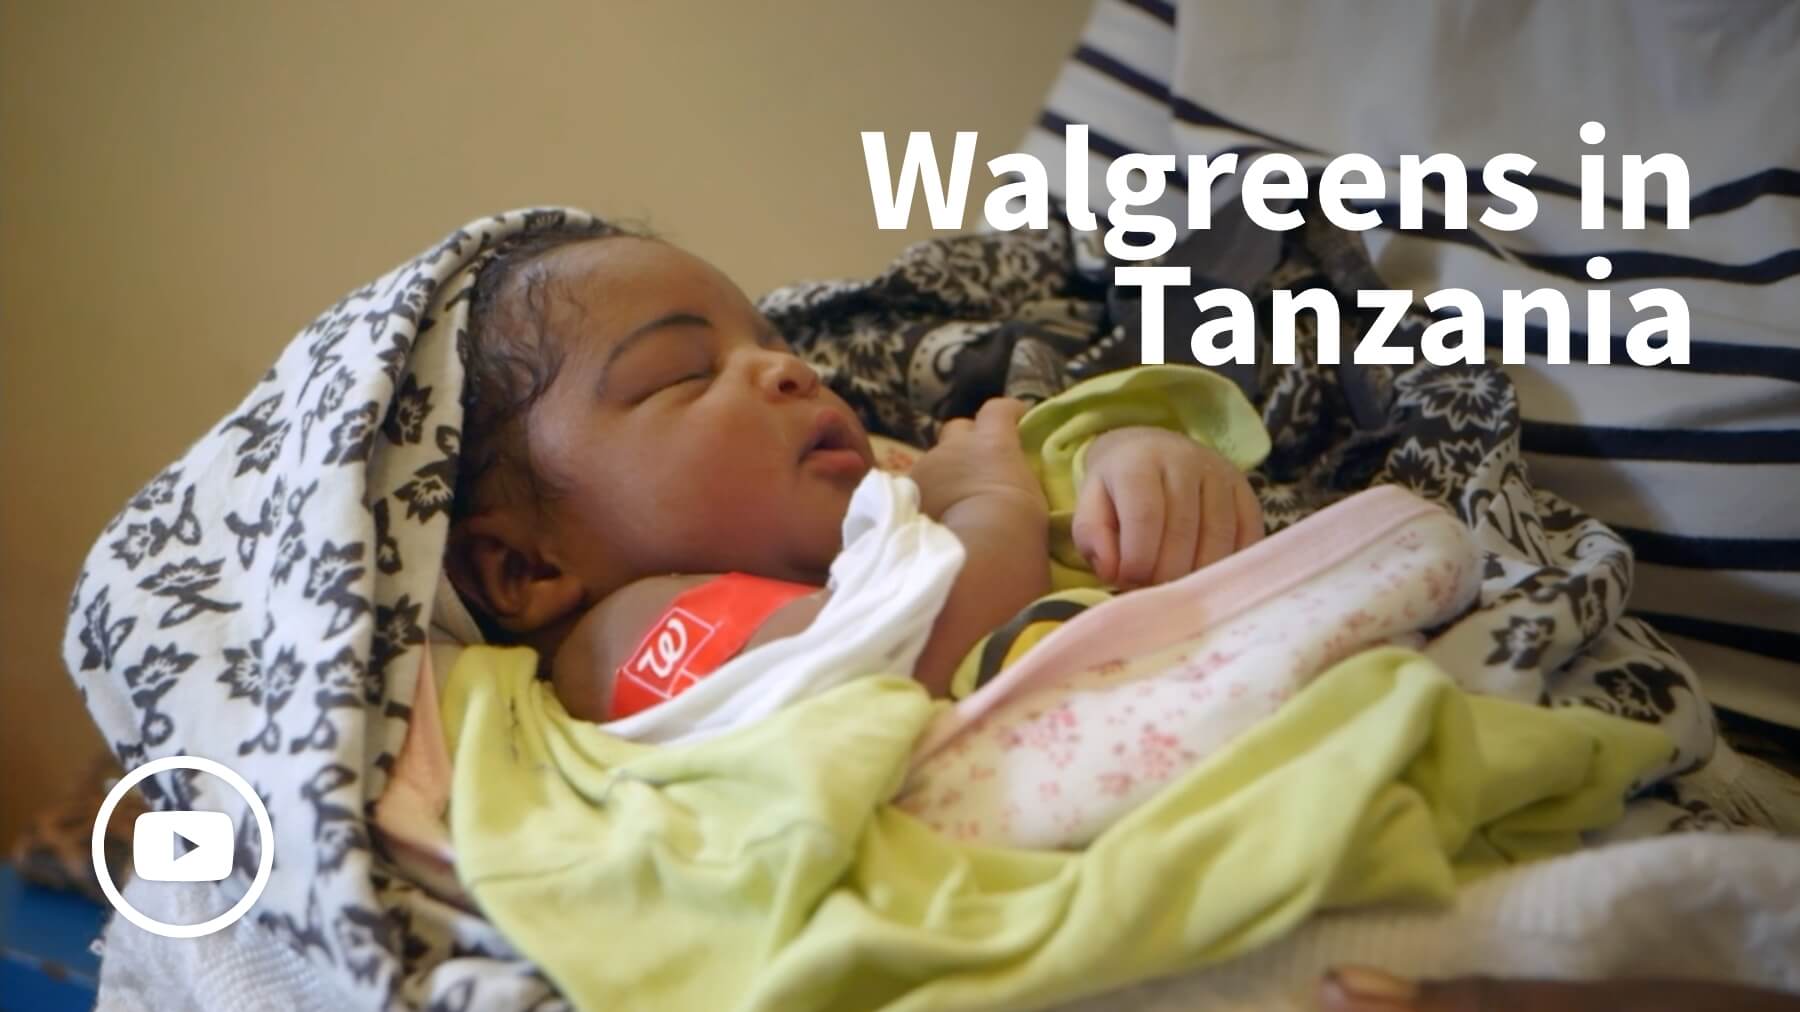 Walgreens in Tanzania - Get a Shot. Give a Shot. Play video.